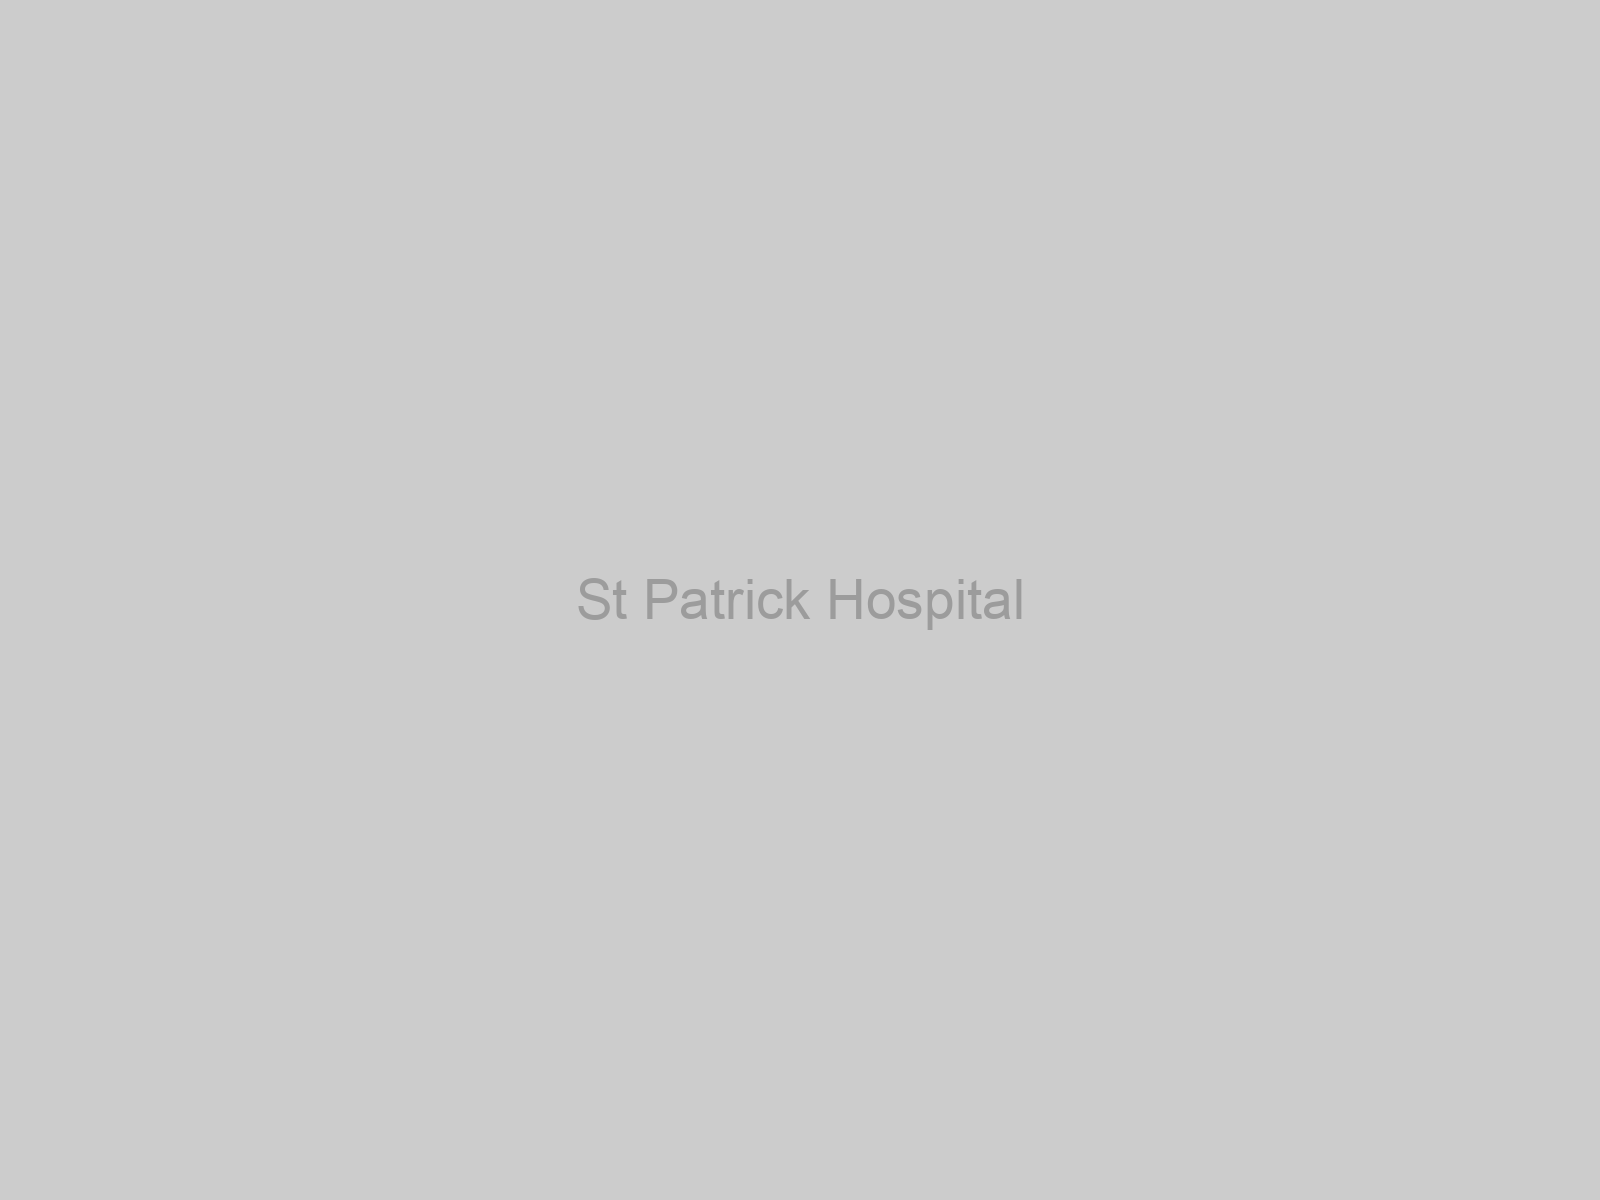 St Patrick Hospital